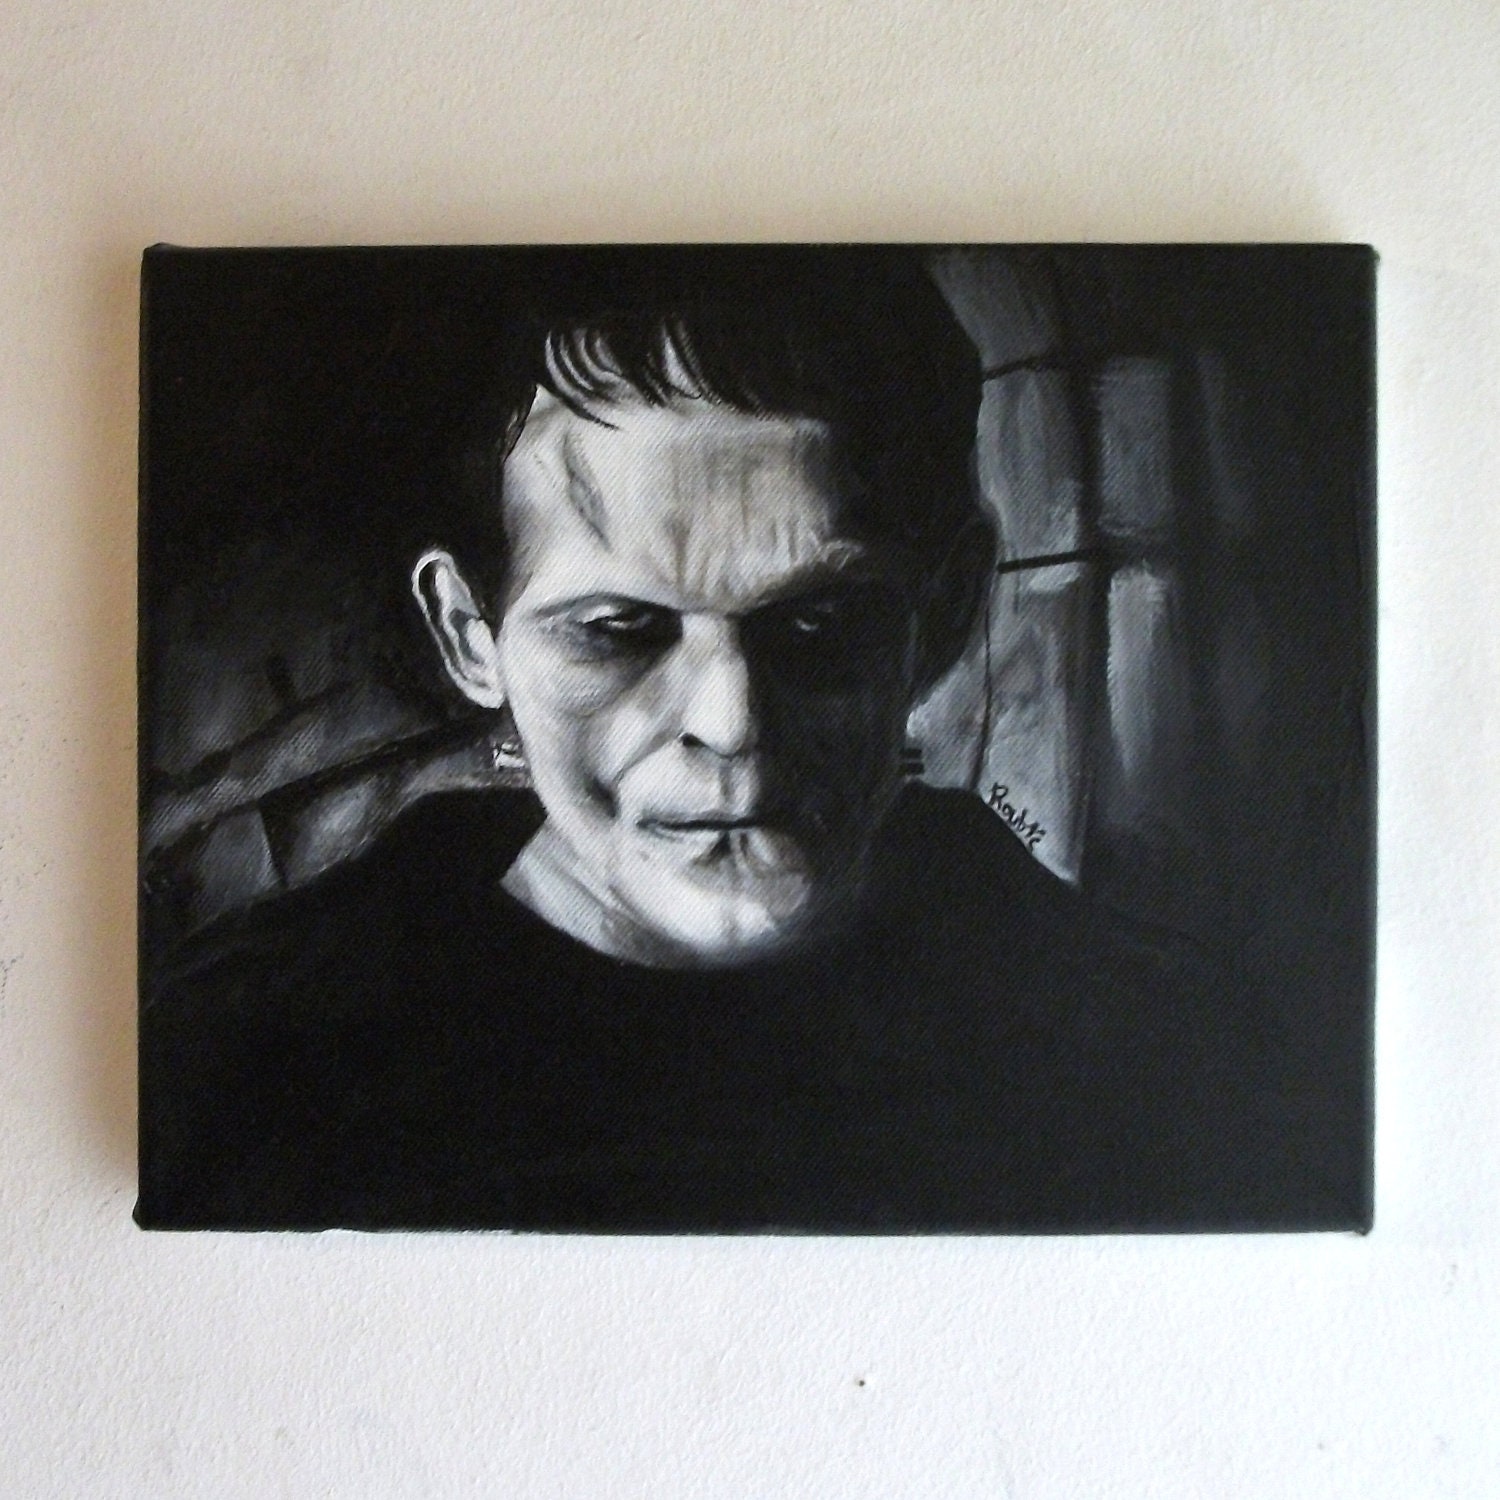 Boris Karloff as the monster of Frankenstein - Horror - Black and White - Universal - Horror - Original art painting by Rouble Rust